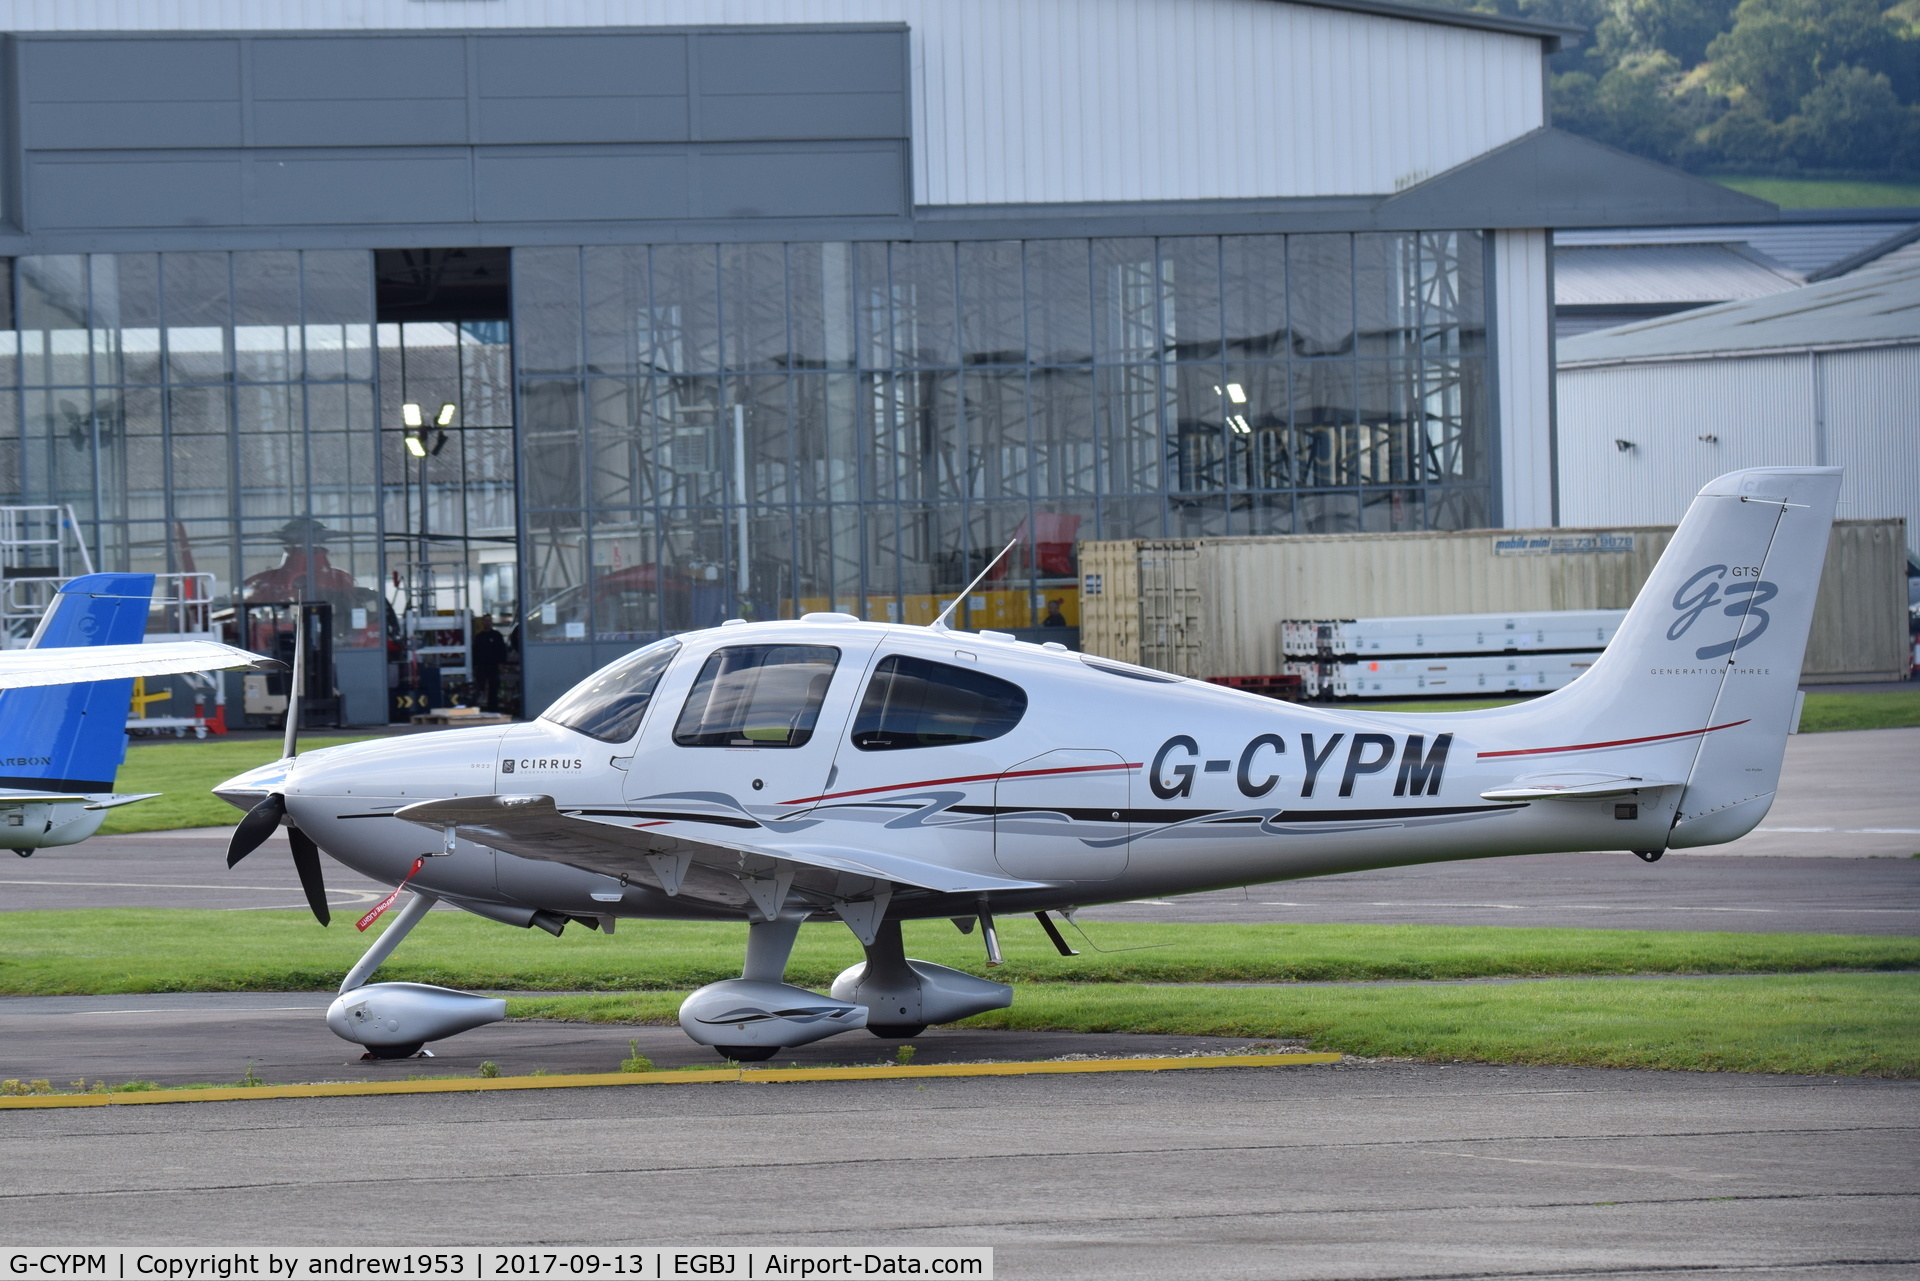 G-CYPM, 2008 Cirrus SR22 G3 GTS C/N 3185, G-CYPM at Gloucestershire Airport.